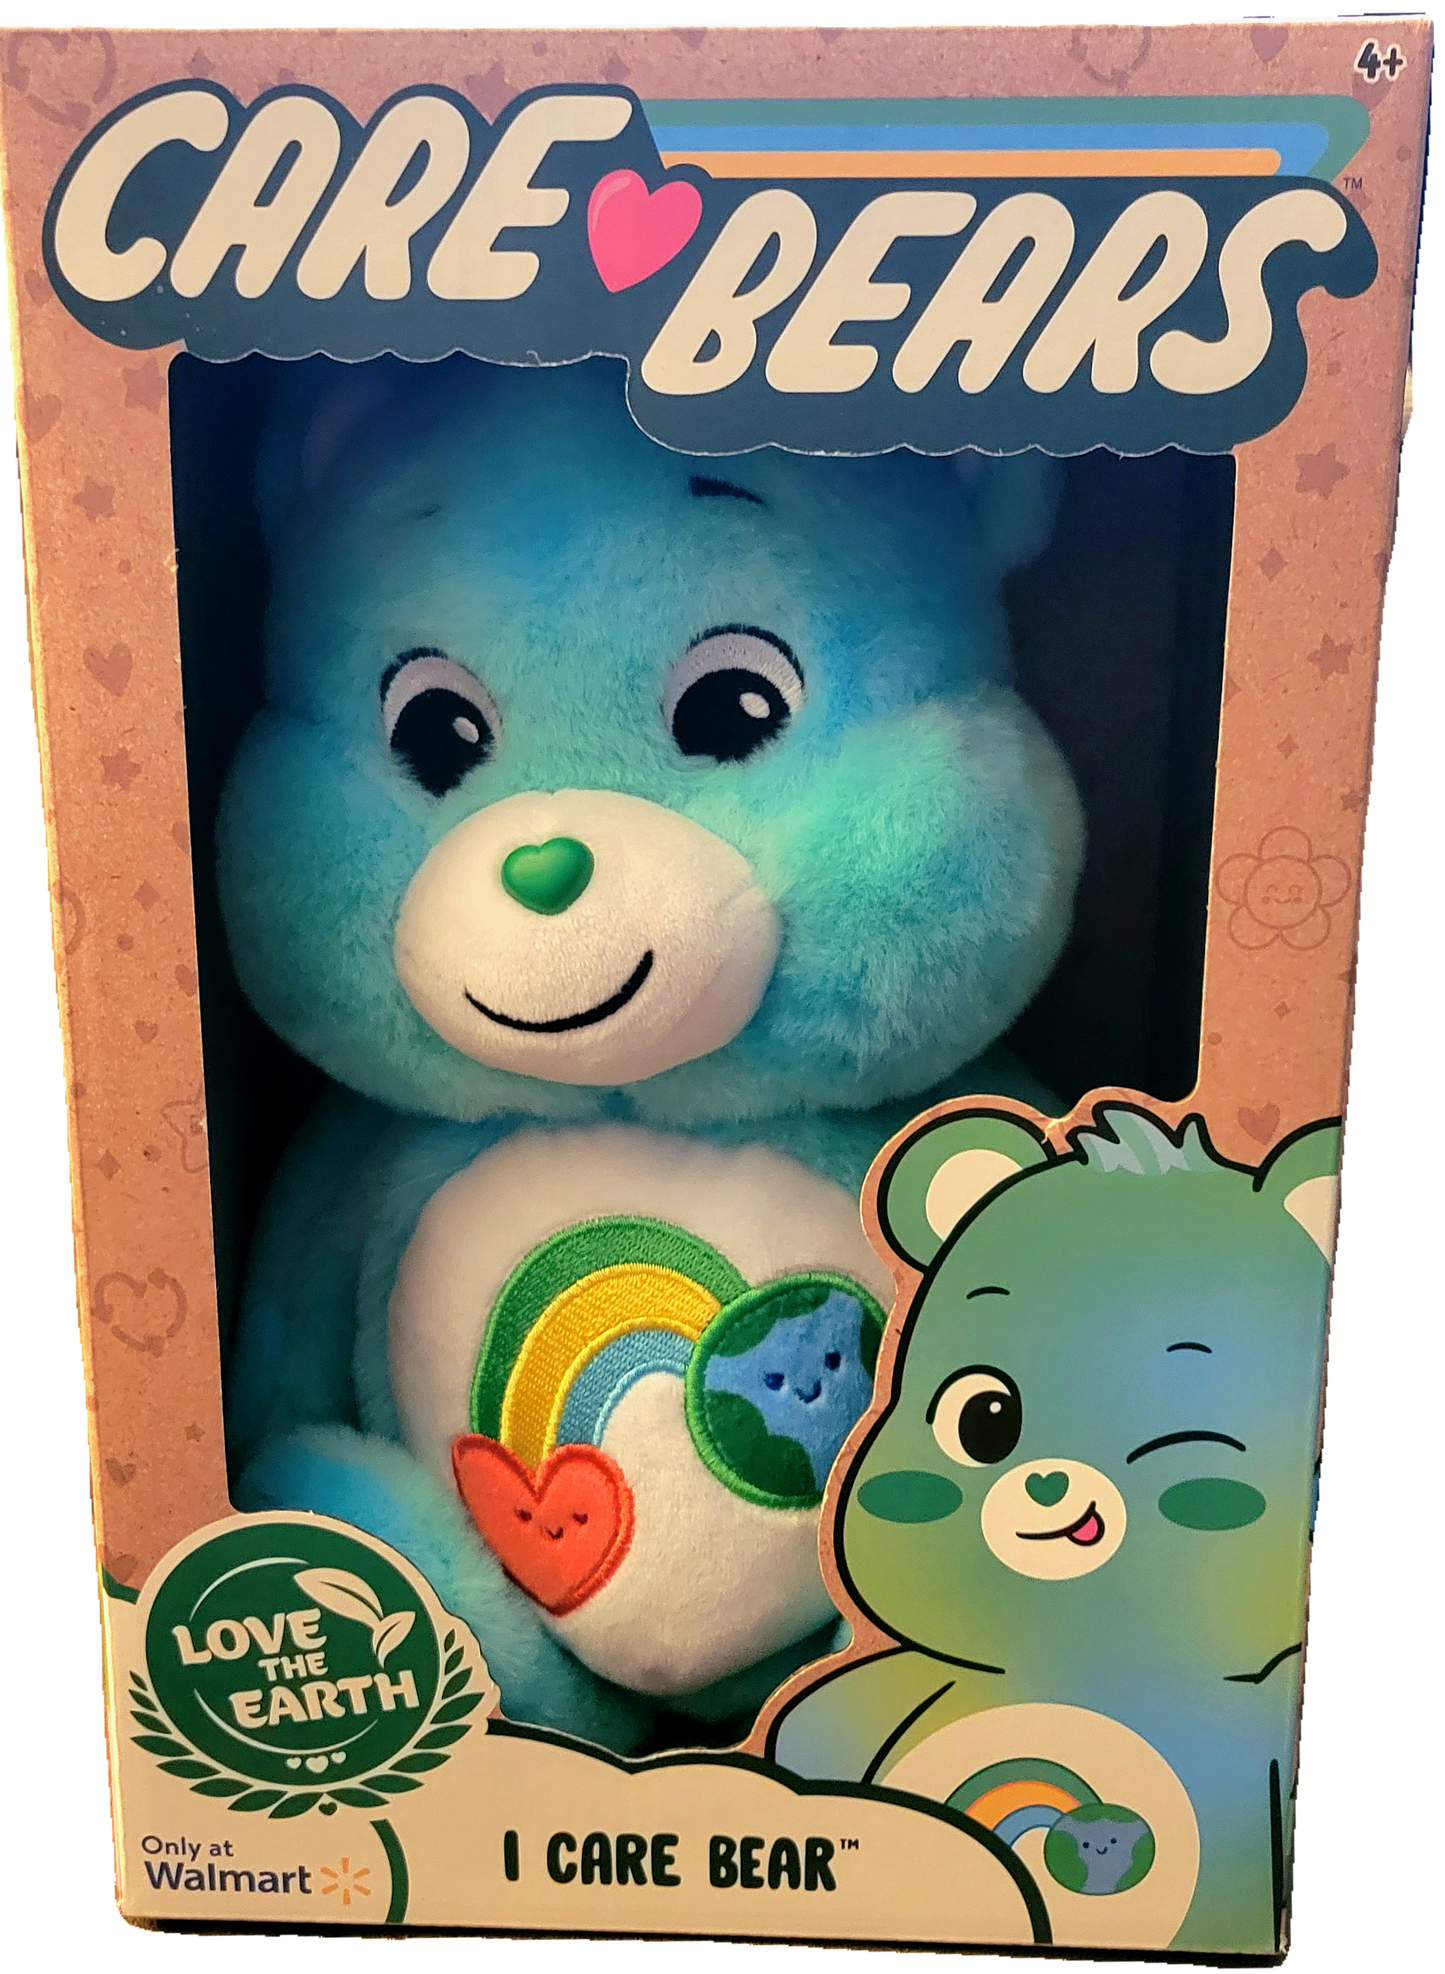 Care Bears Walmart Exclusive "I Care Bear" Love The Earth Stuffed Animal